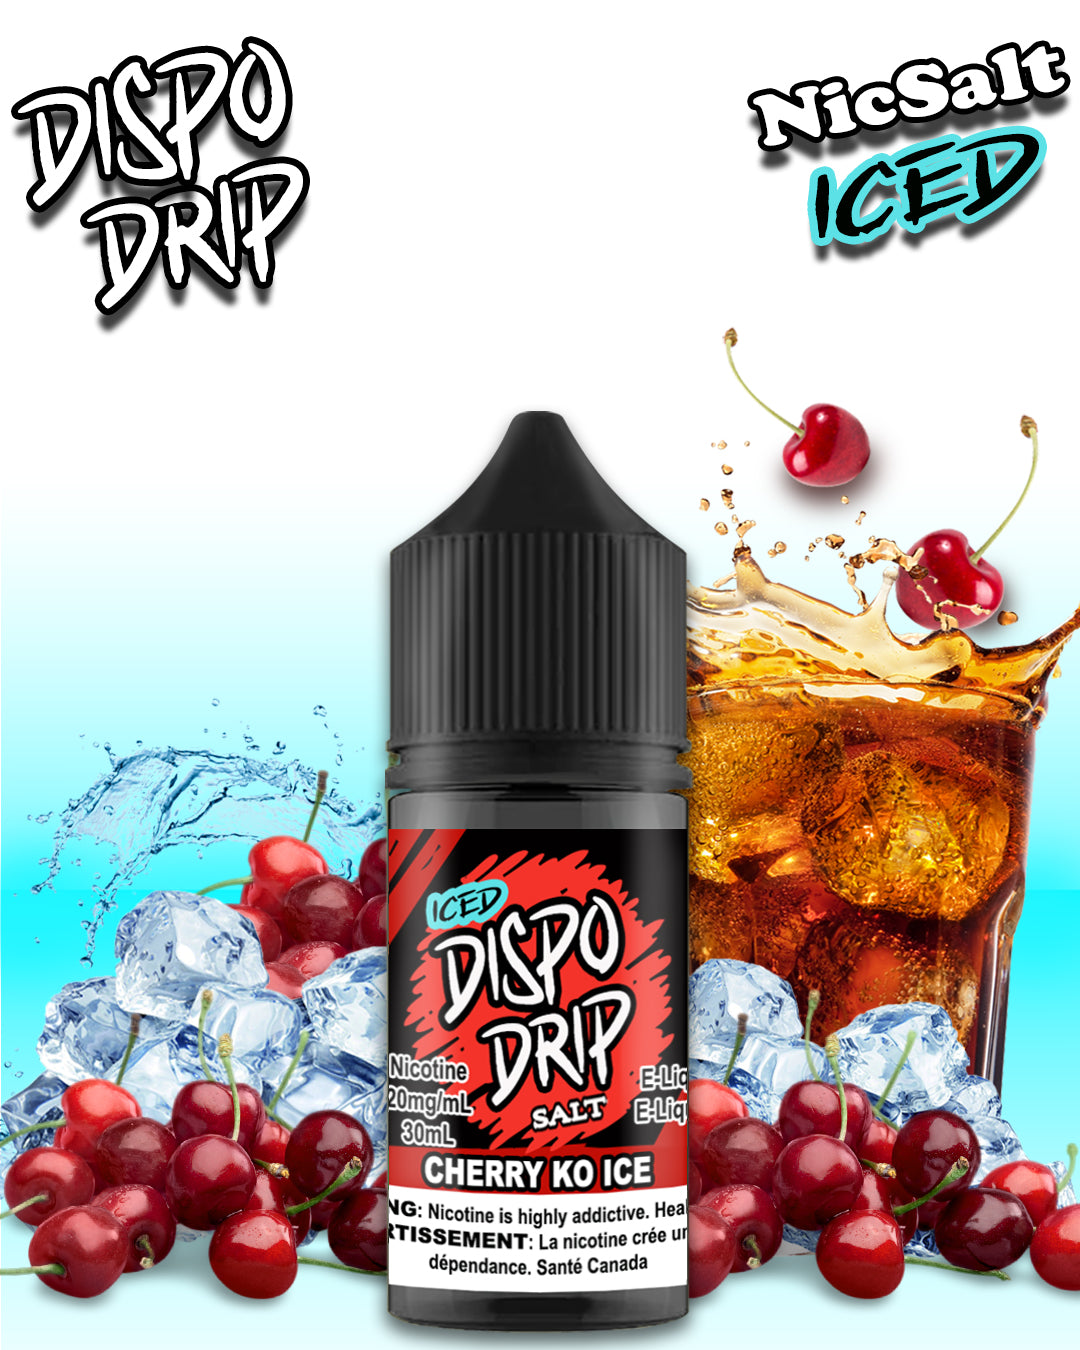 DISPO DRIP ICED - CHERRY KO ICE SALT